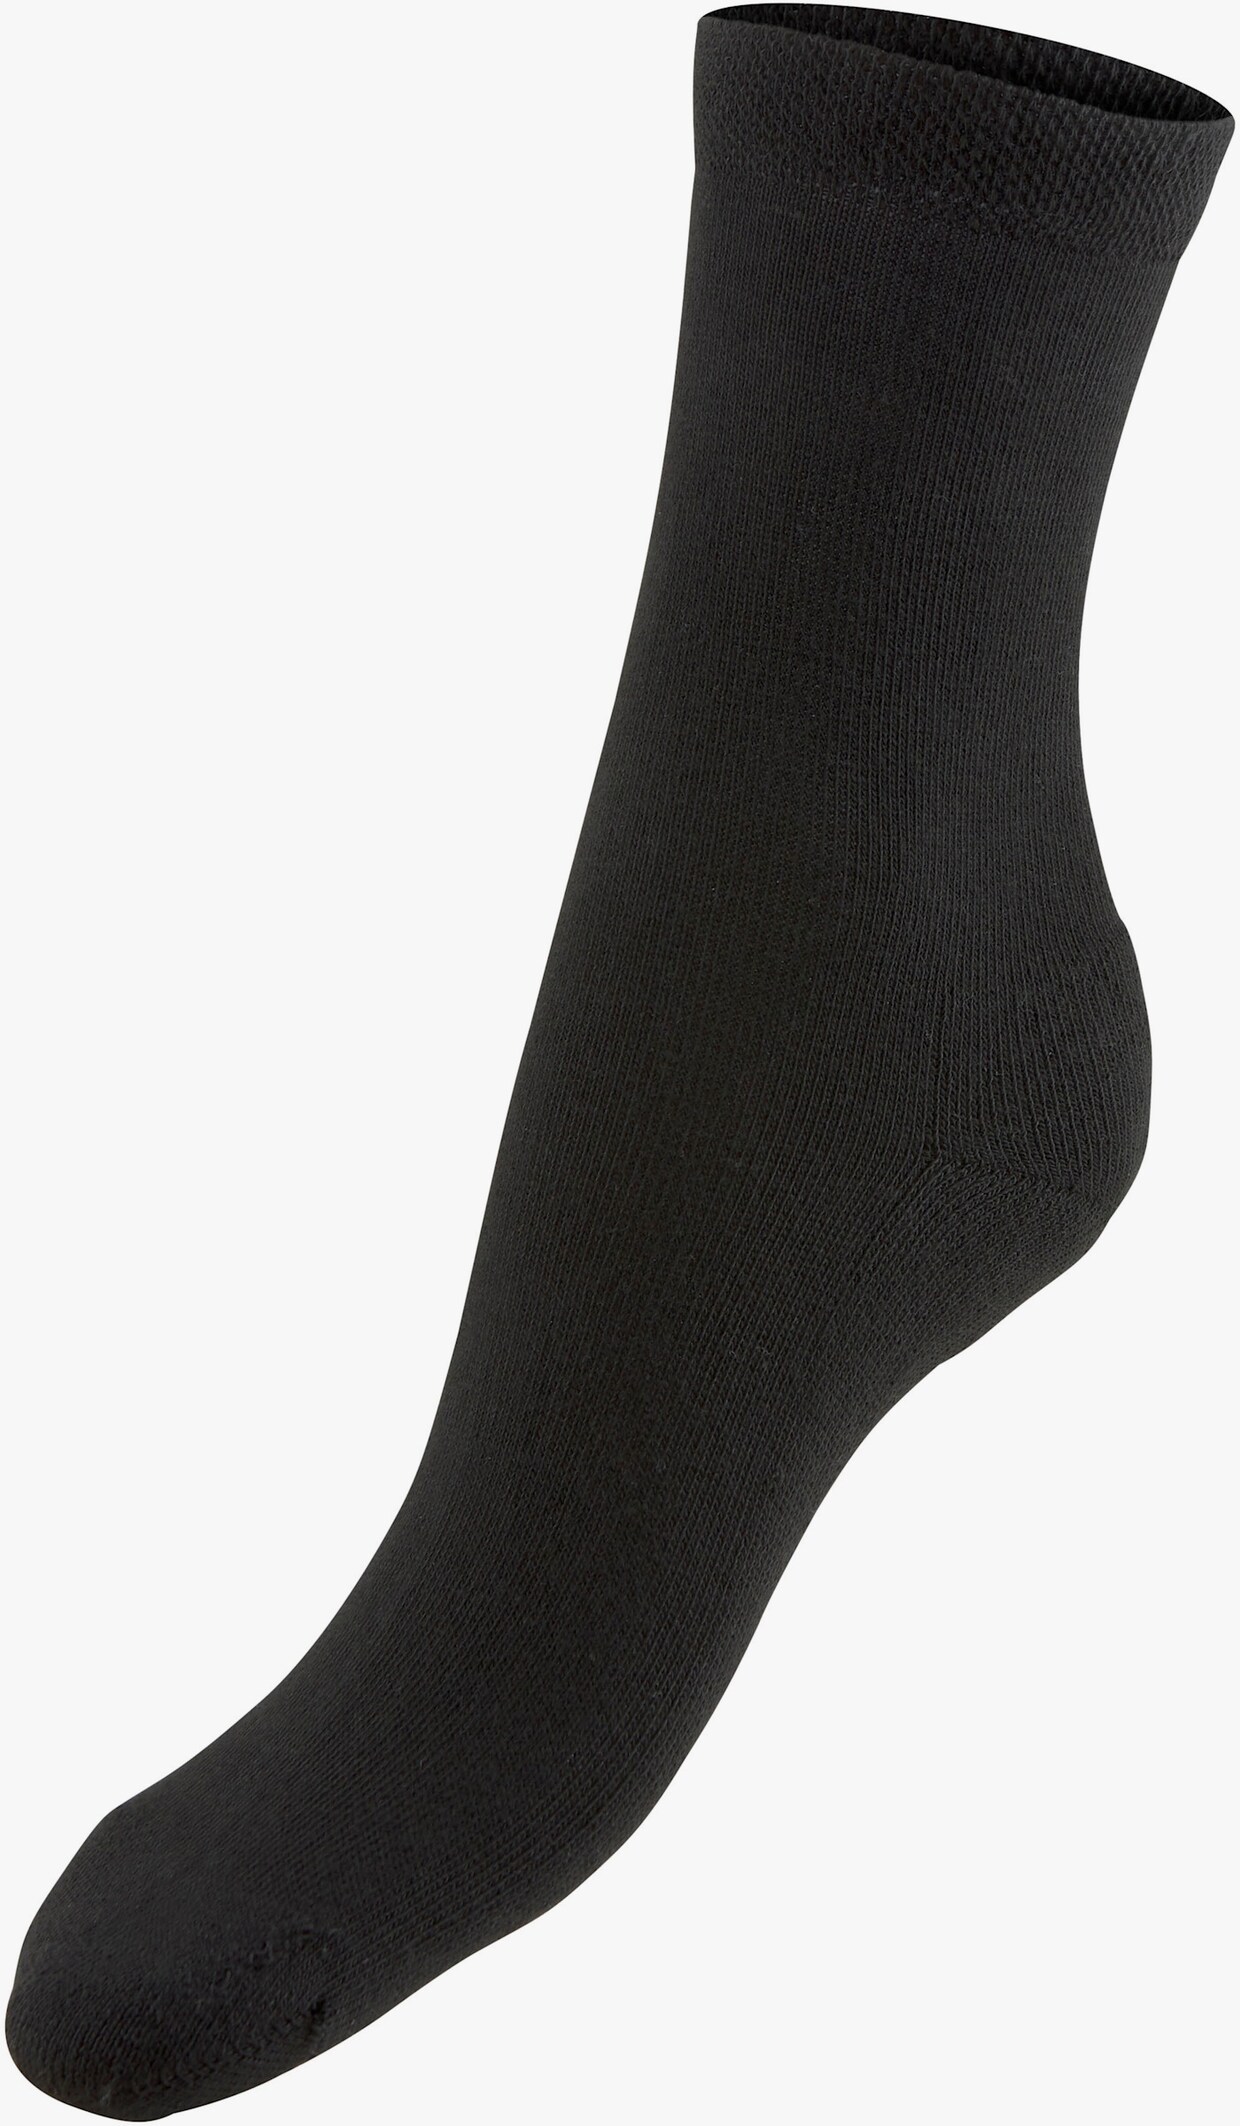 H.I.S Socken - 2x schwarz, 2x jeans-melange, 2x grau-melange